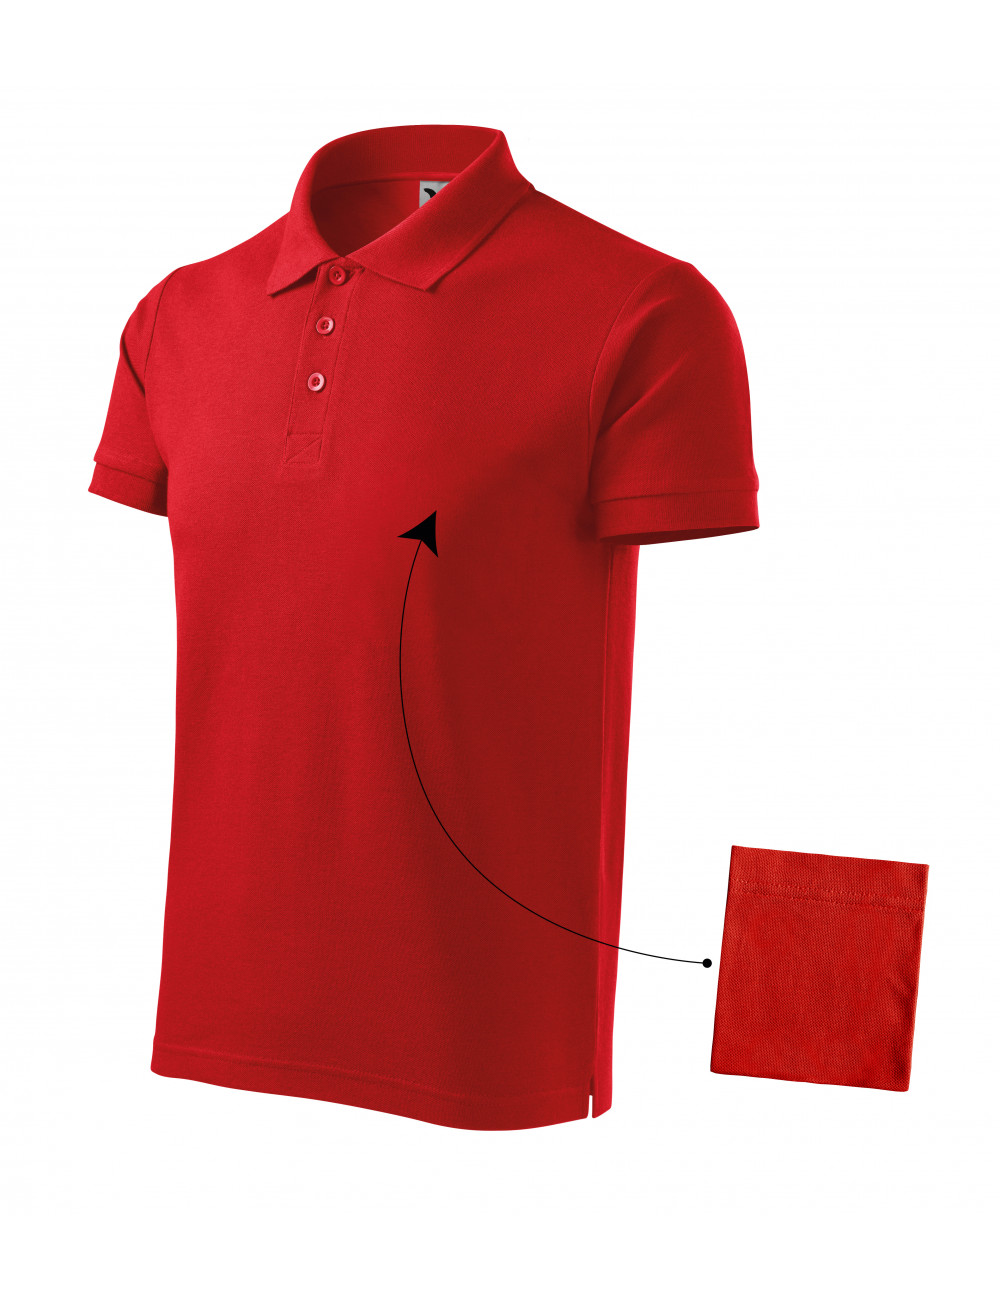 Koszulka polo męska cotton 212 czerwony Adler Malfini